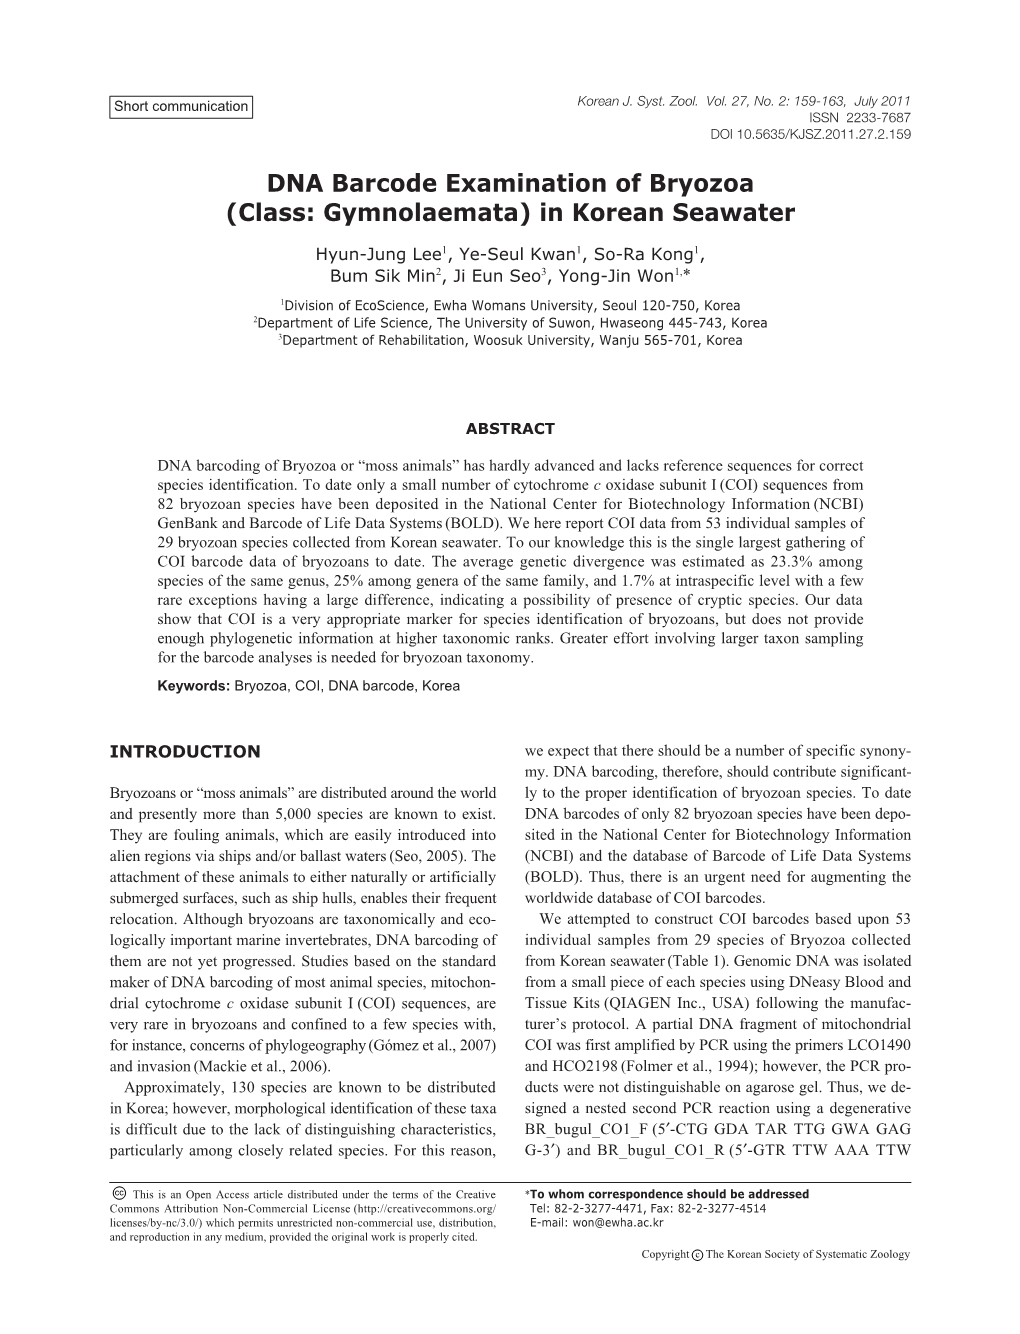 DNA Barcode Examination of Bryozoa (Class: Gymnolaemata) in Korean Seawater